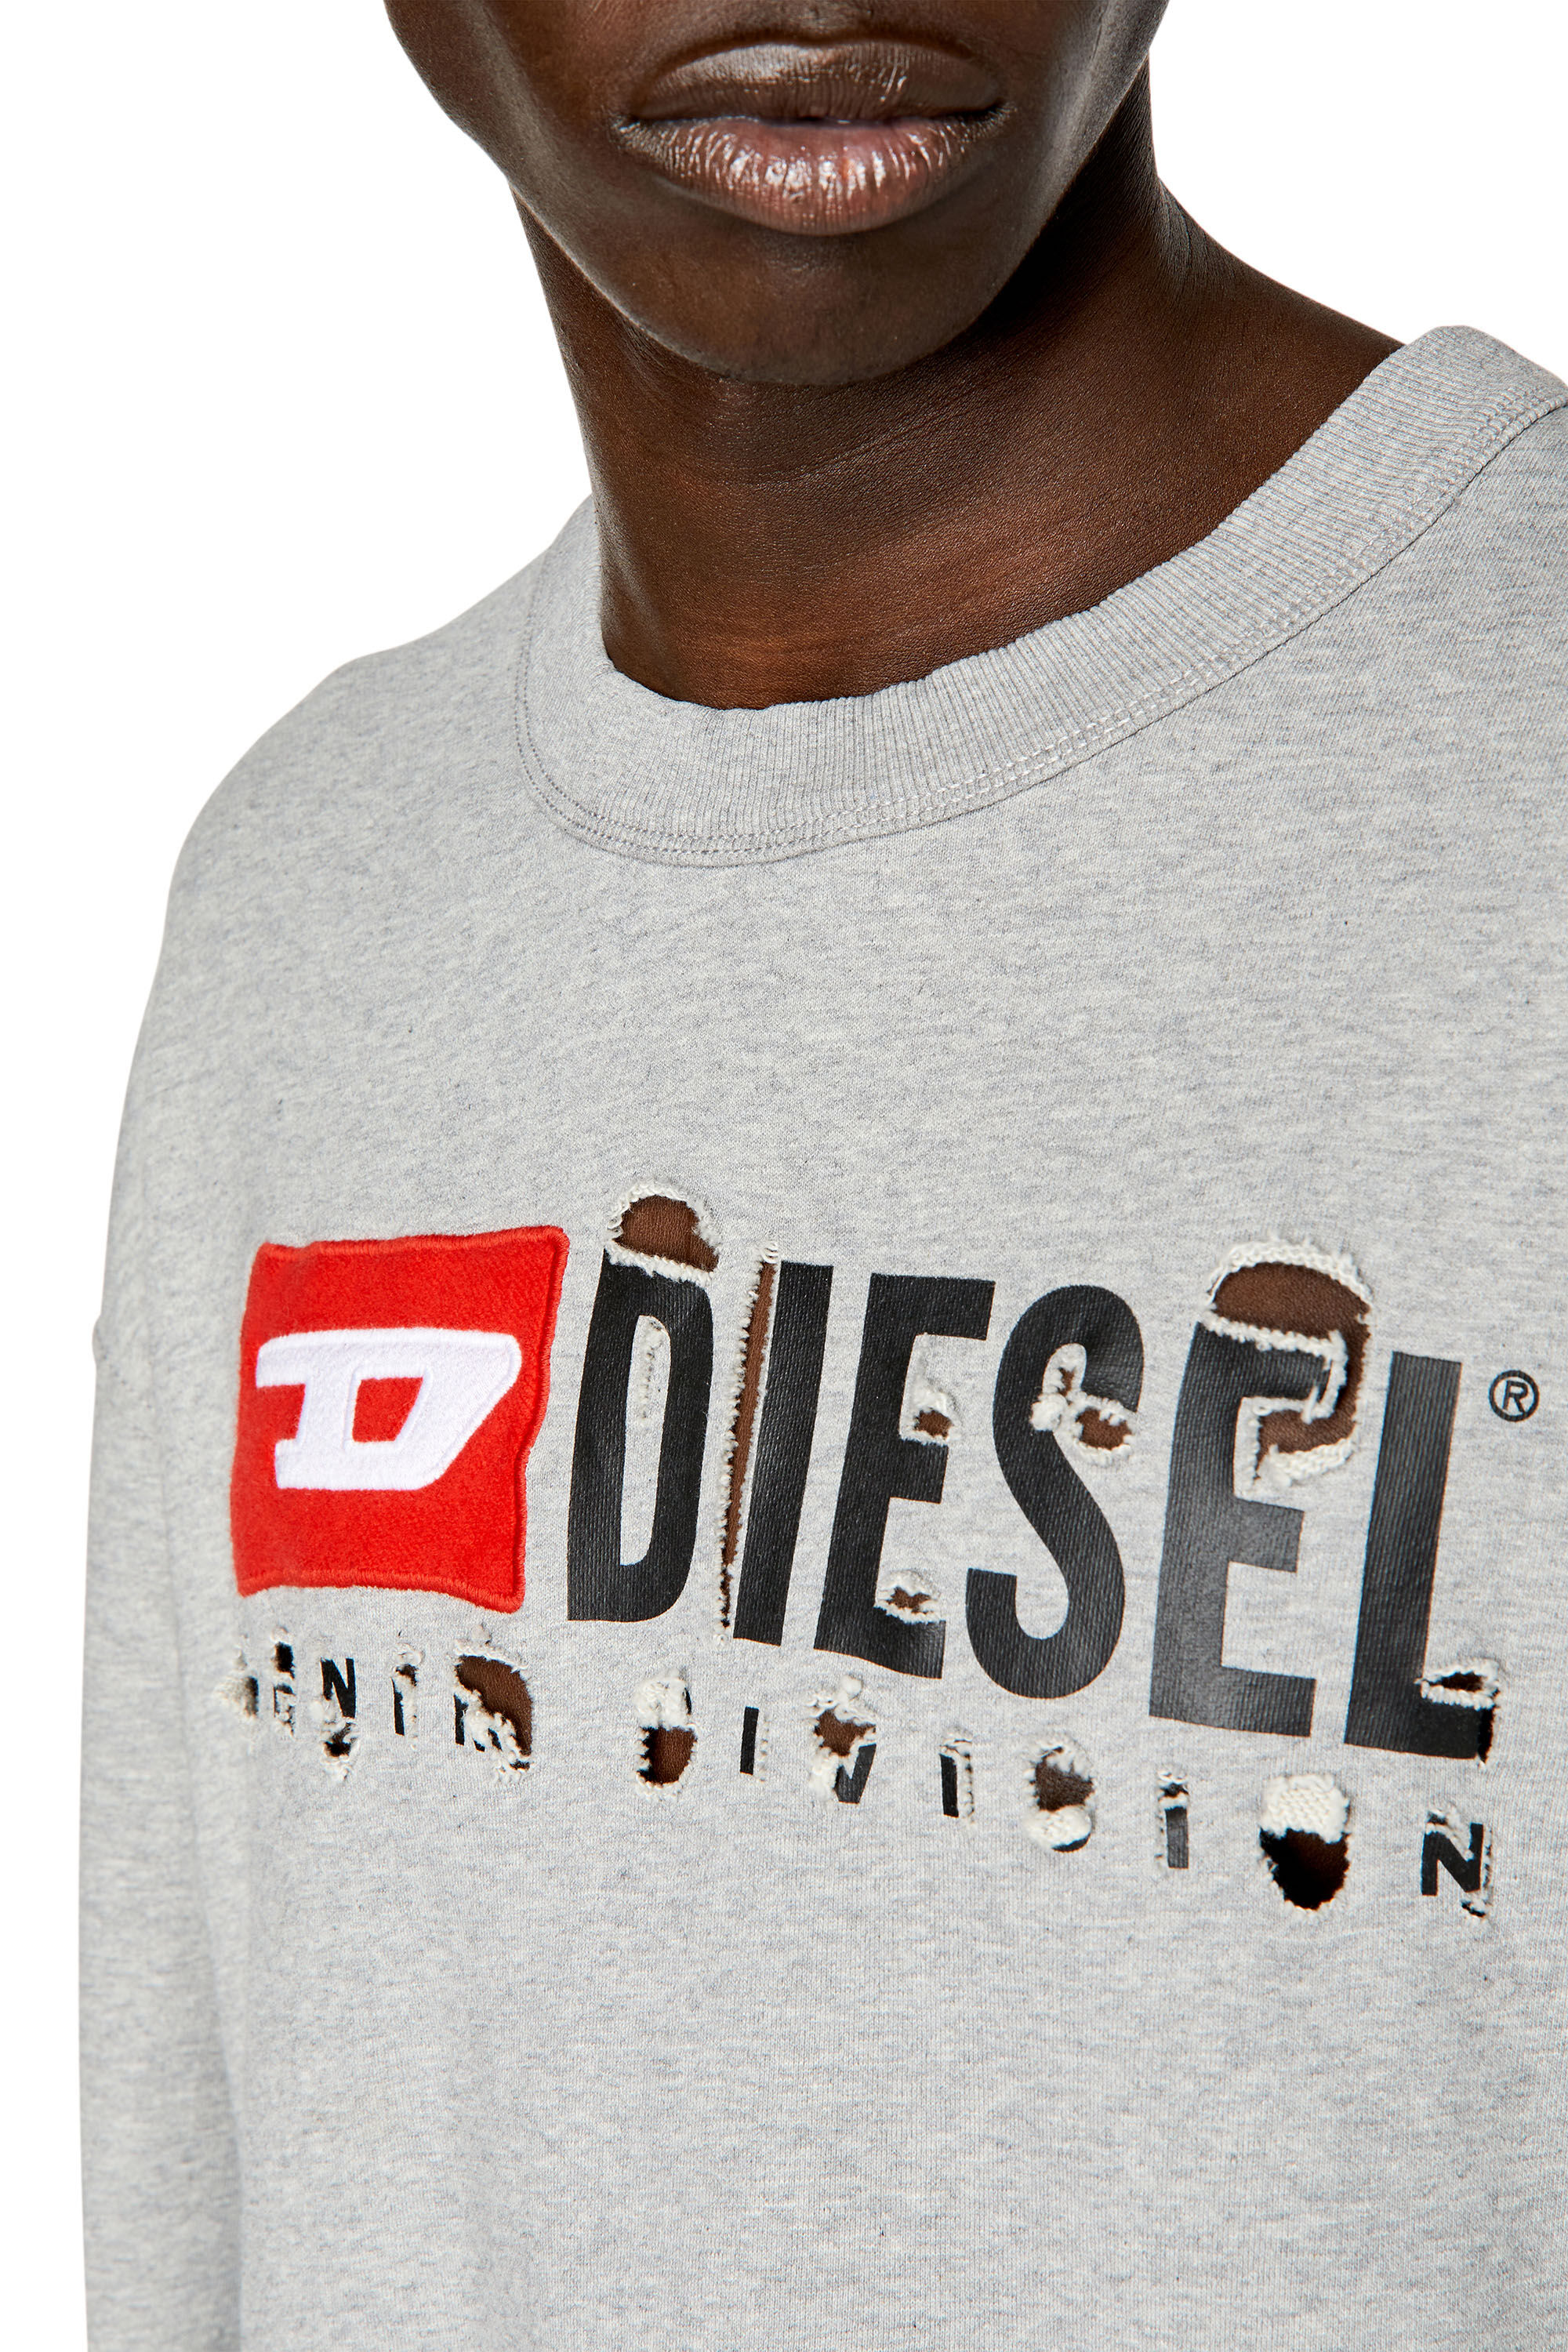 Diesel - S-MACS-DIVSTROYED, Light Grey - Image 5